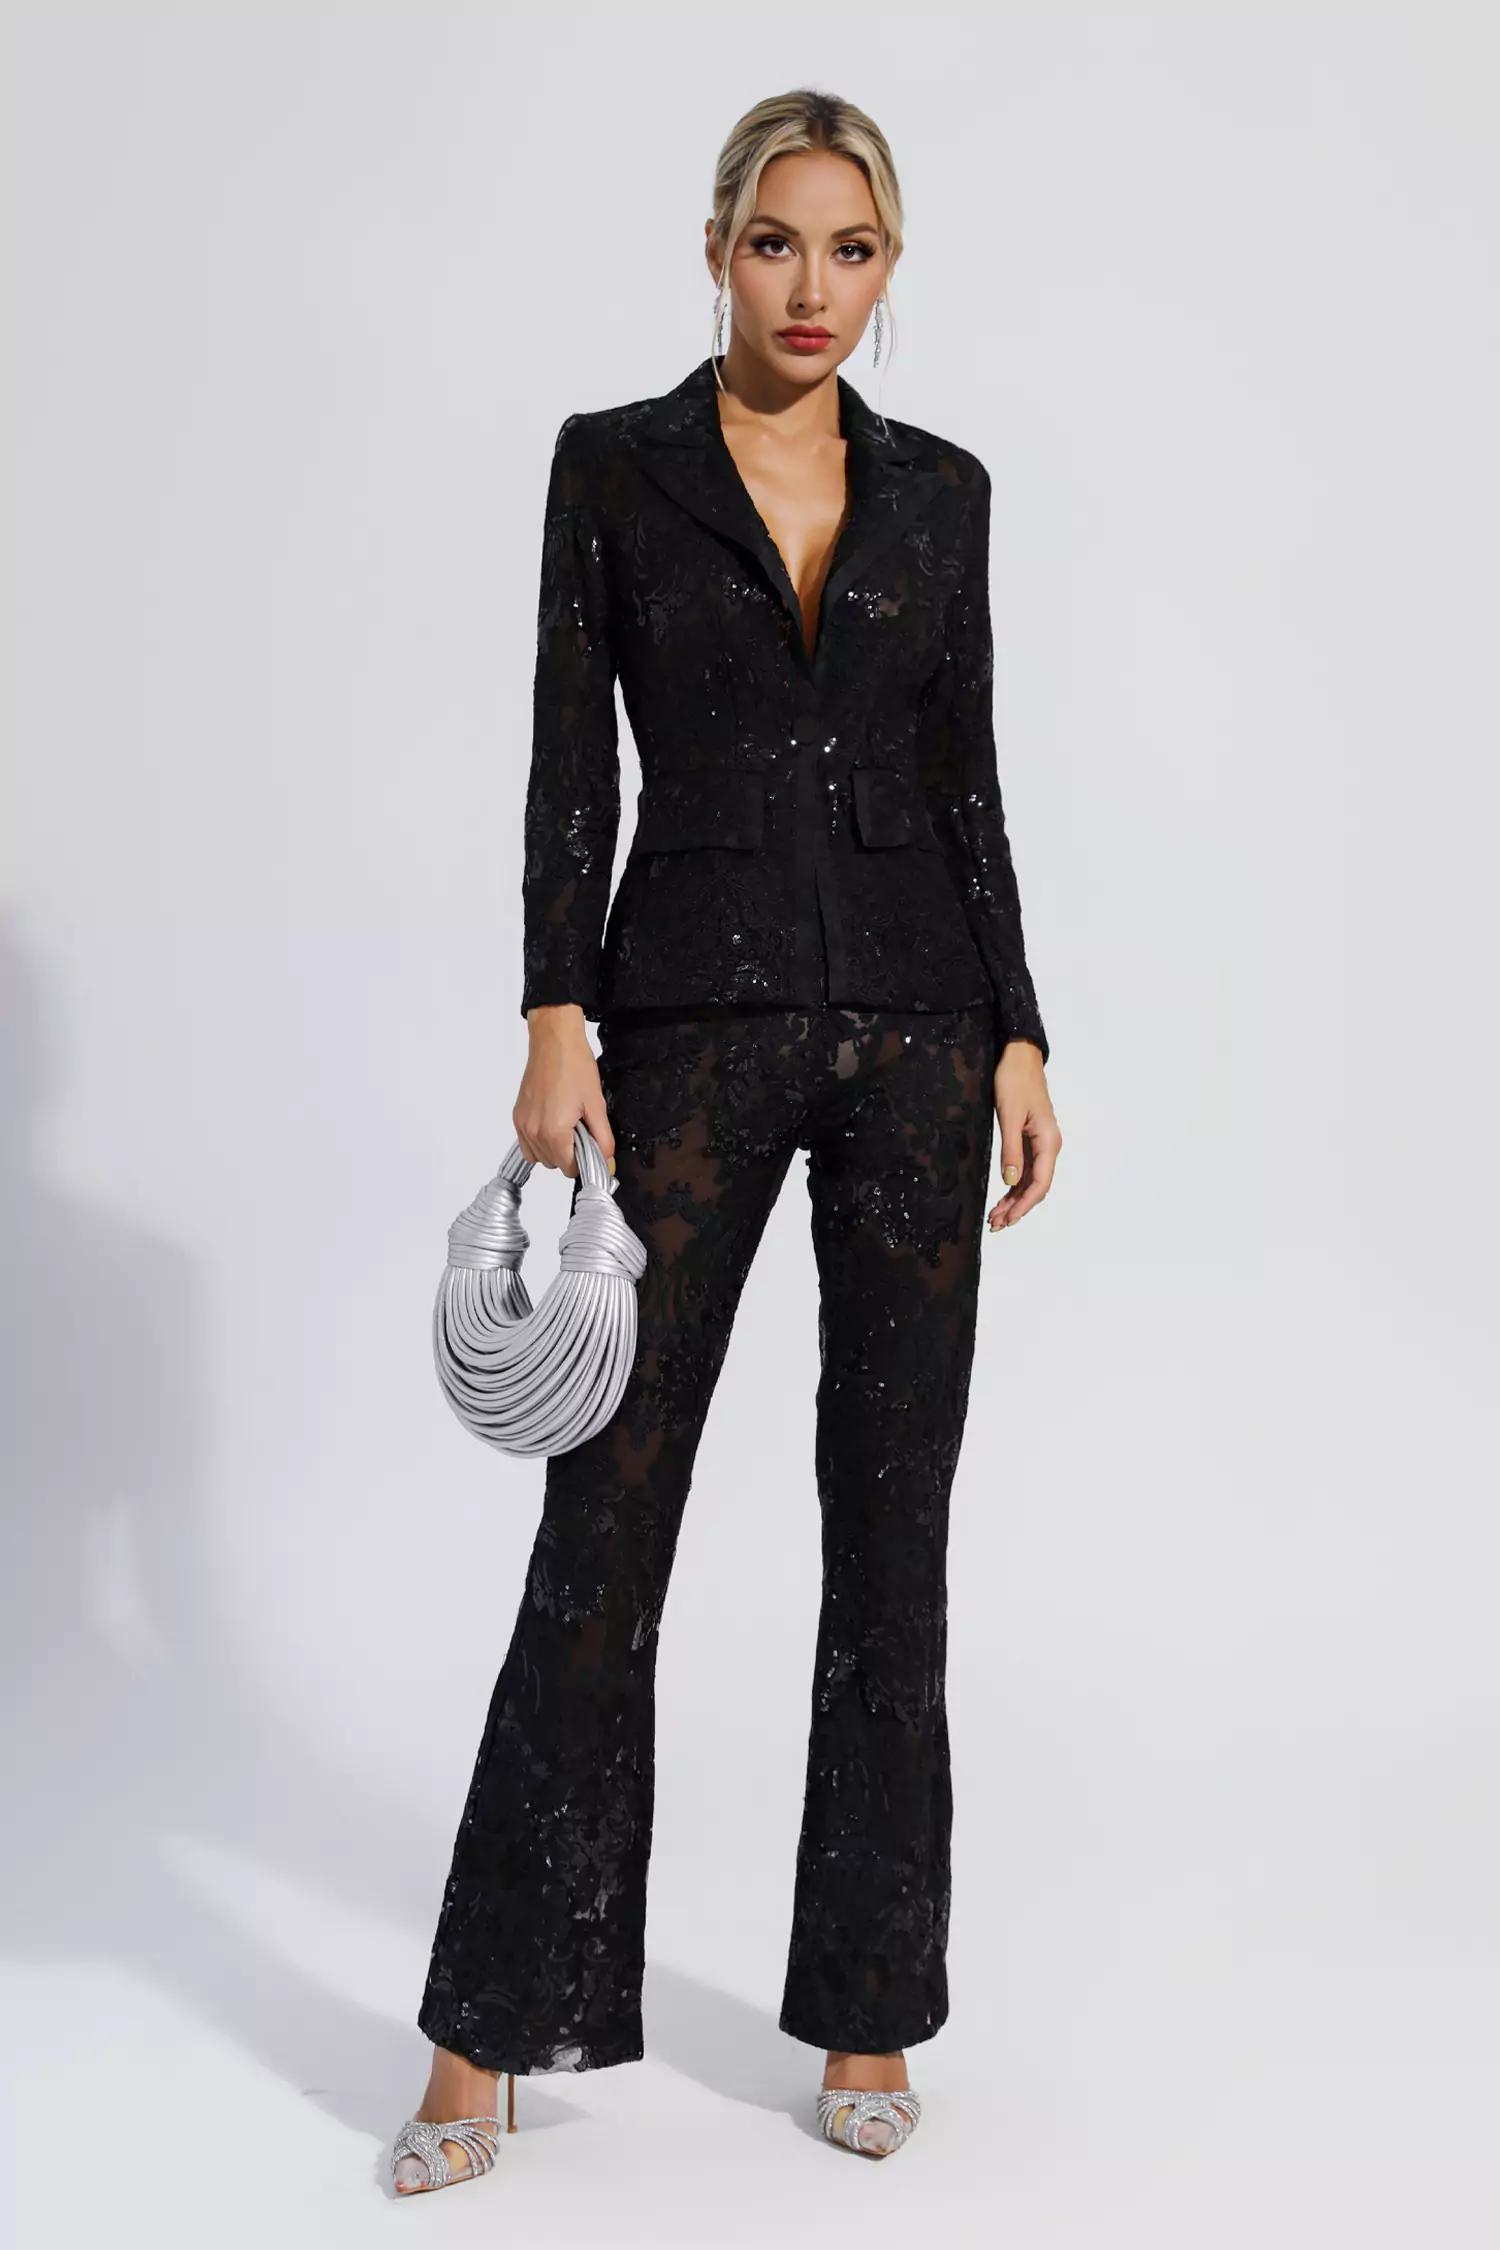 Reyna Black Cutout Sequin Blazer Set